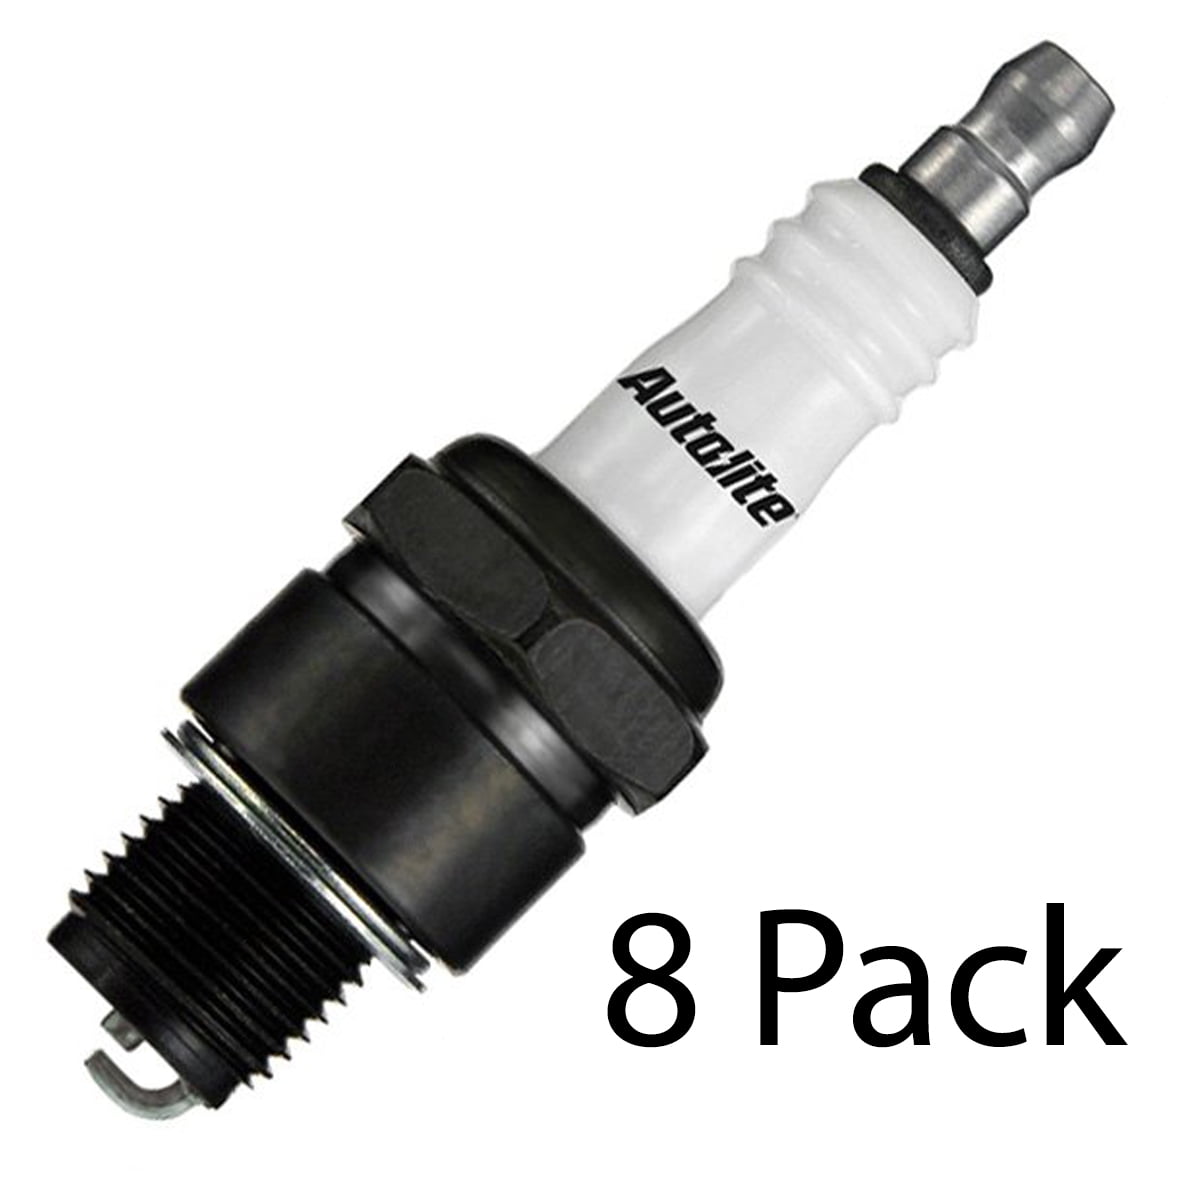 8 Pack Autolite Small Engine Copper Core Spark Plugs # 25-8PK 